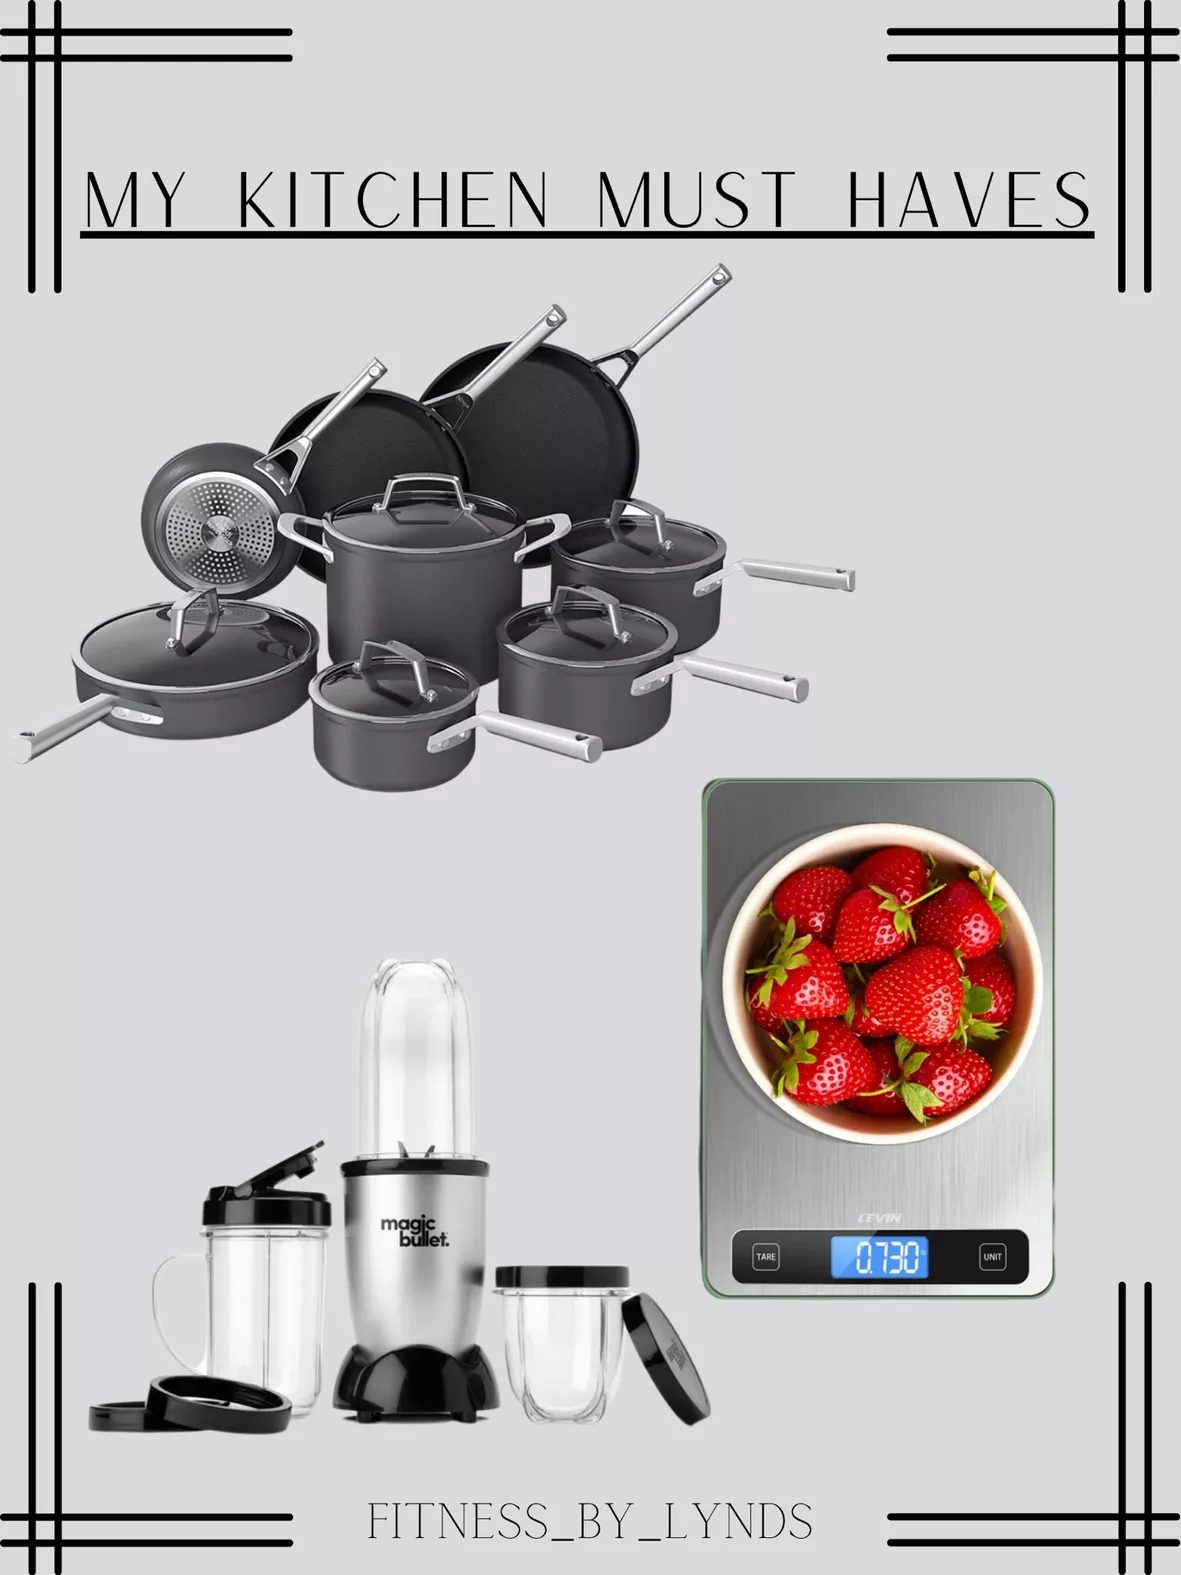 Ninja C39600 Foodi NeverStick 13-Piece Cookware Set